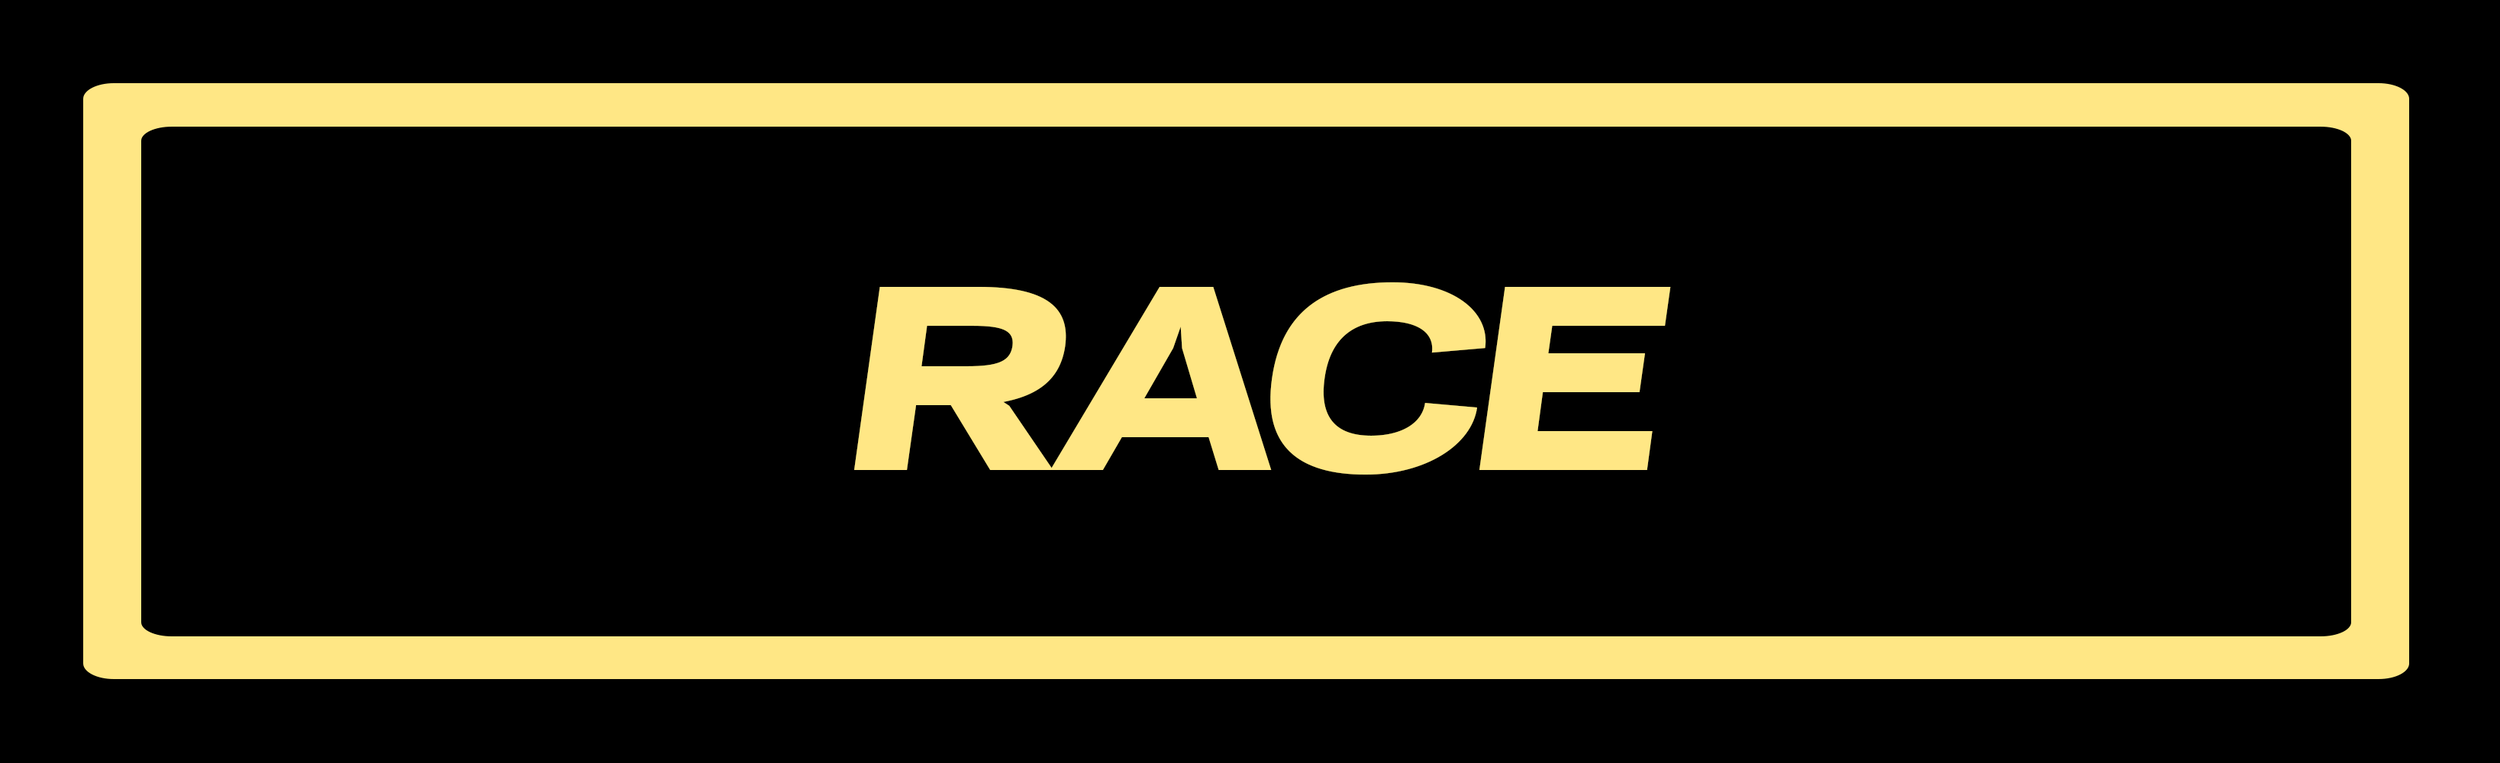 Episode Category: Race